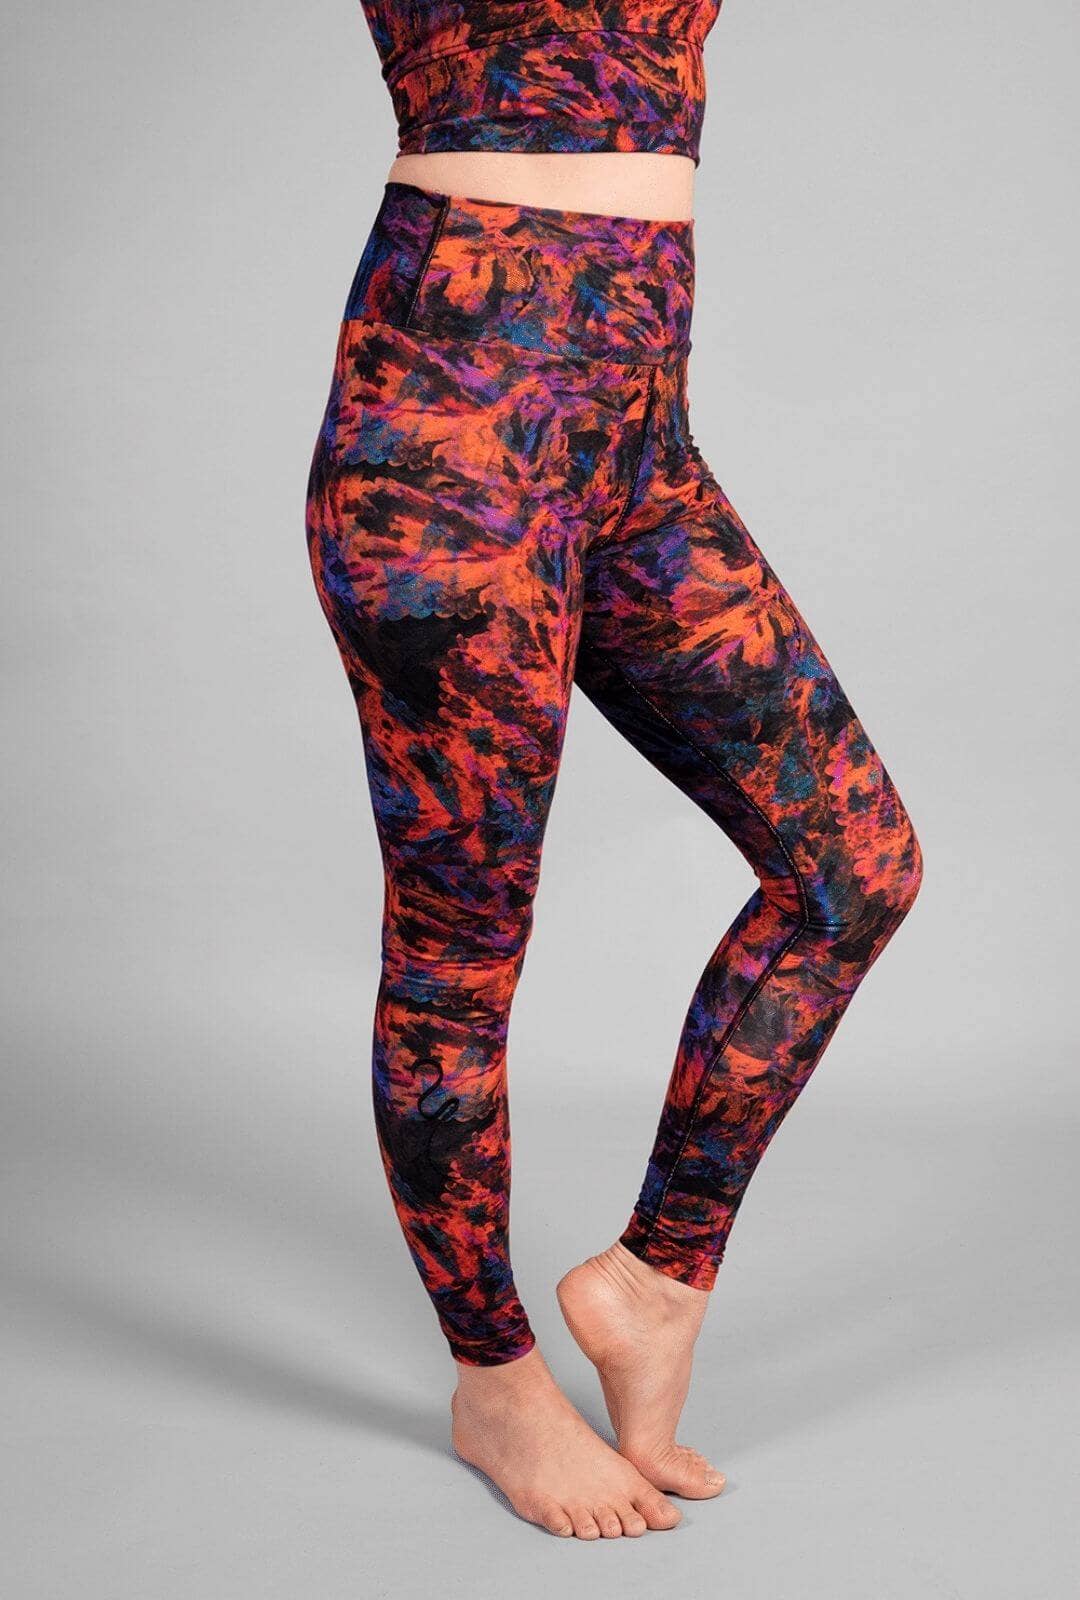 Vega Women's Yoga Leggings - Print